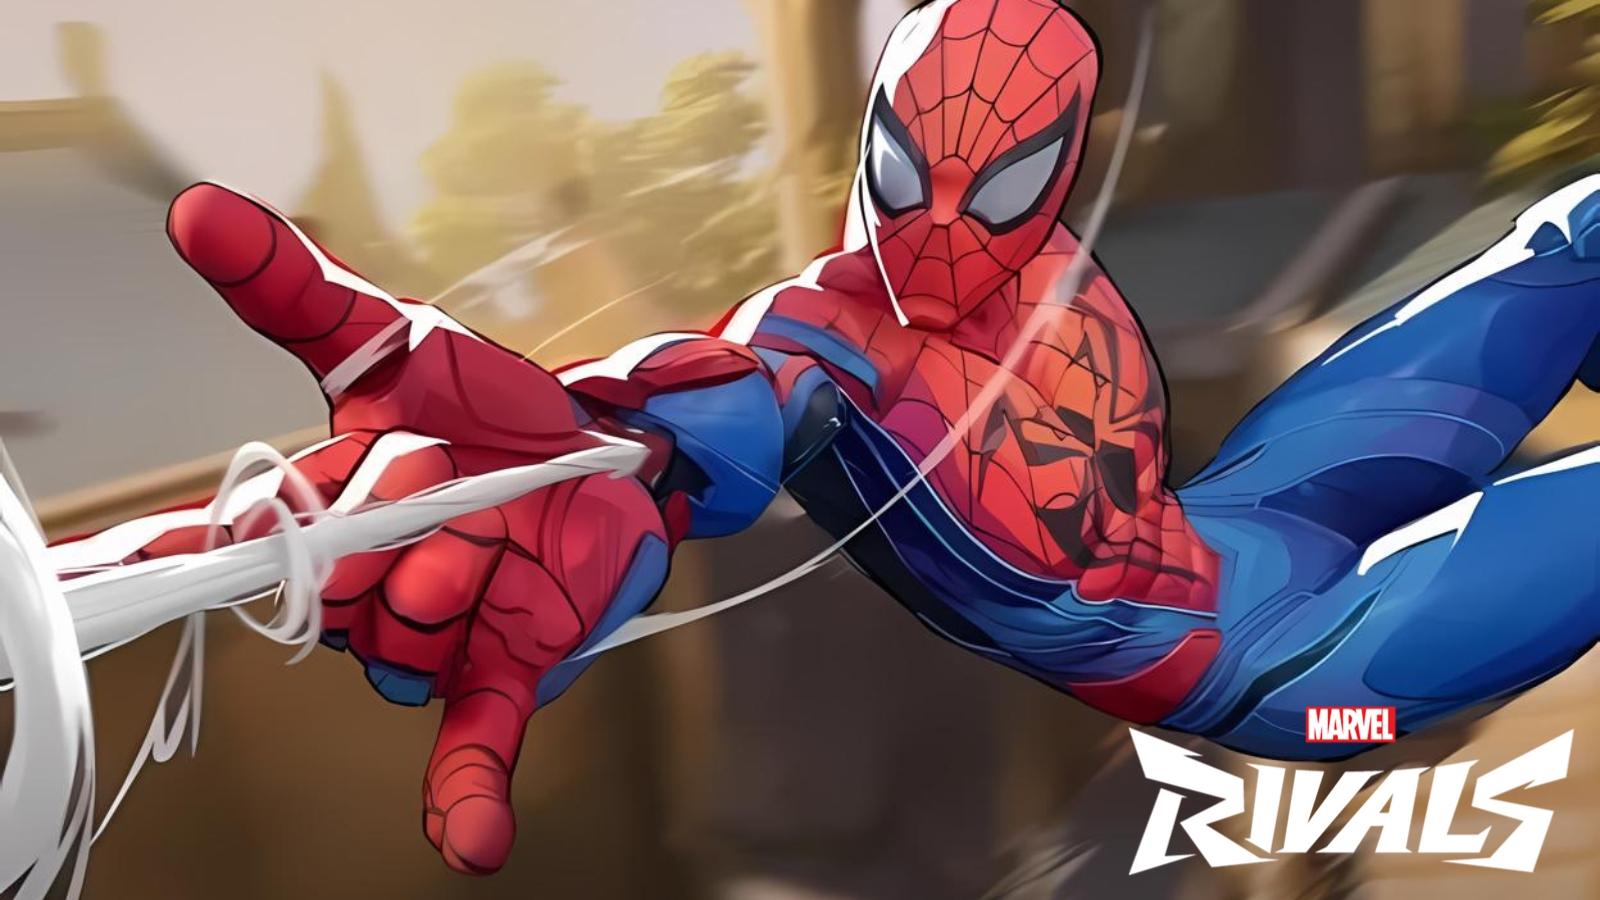 Marvel Rivals Spider-Man costume cover